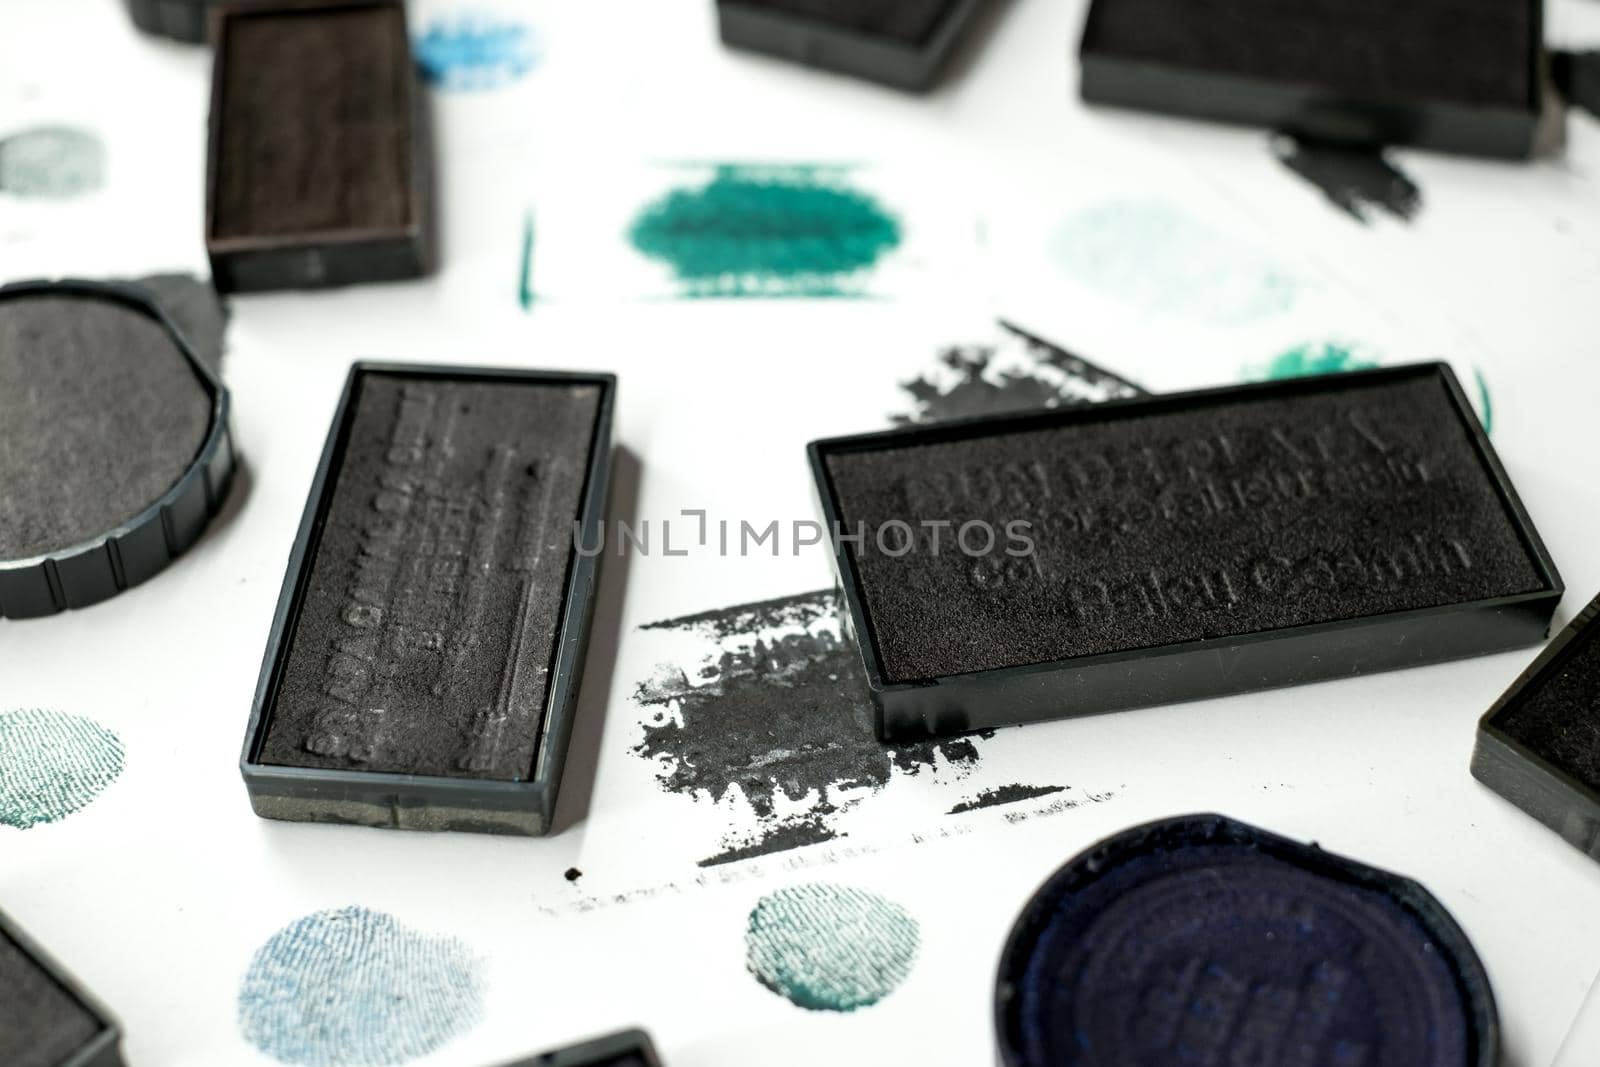 used stamp pad Ink cartridge by Roberto